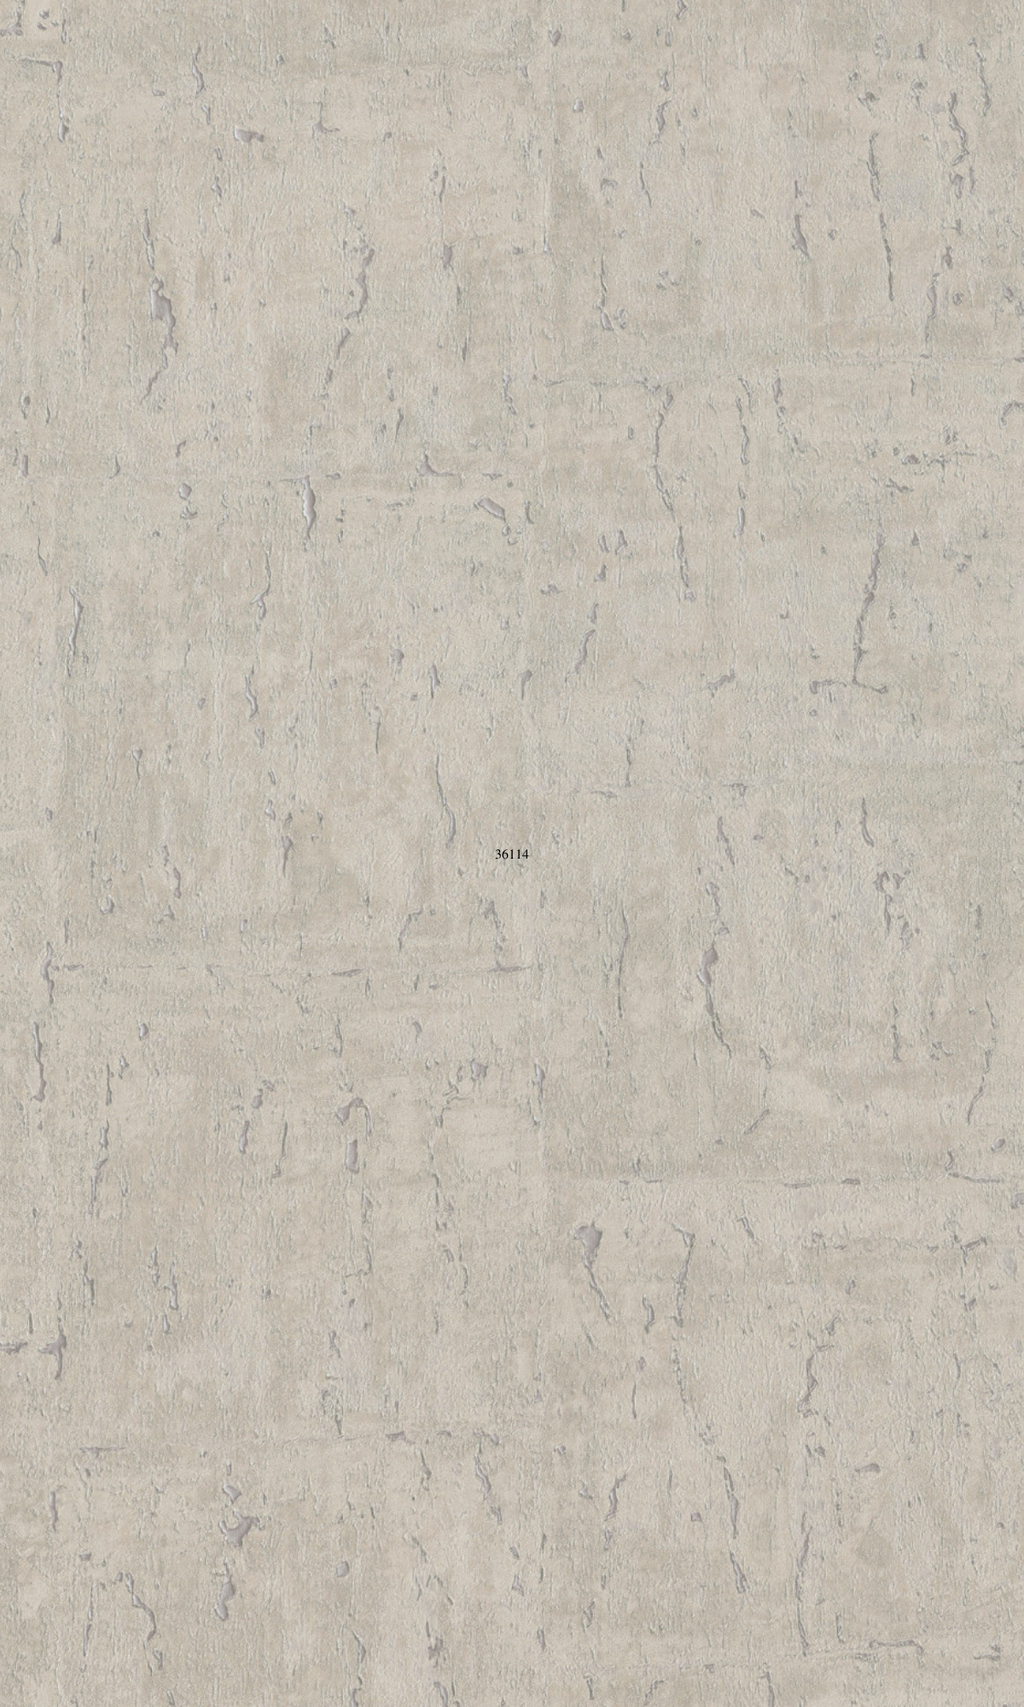 Marbled Metallic Pale Beige Natus Commercial Wallpaper C7158